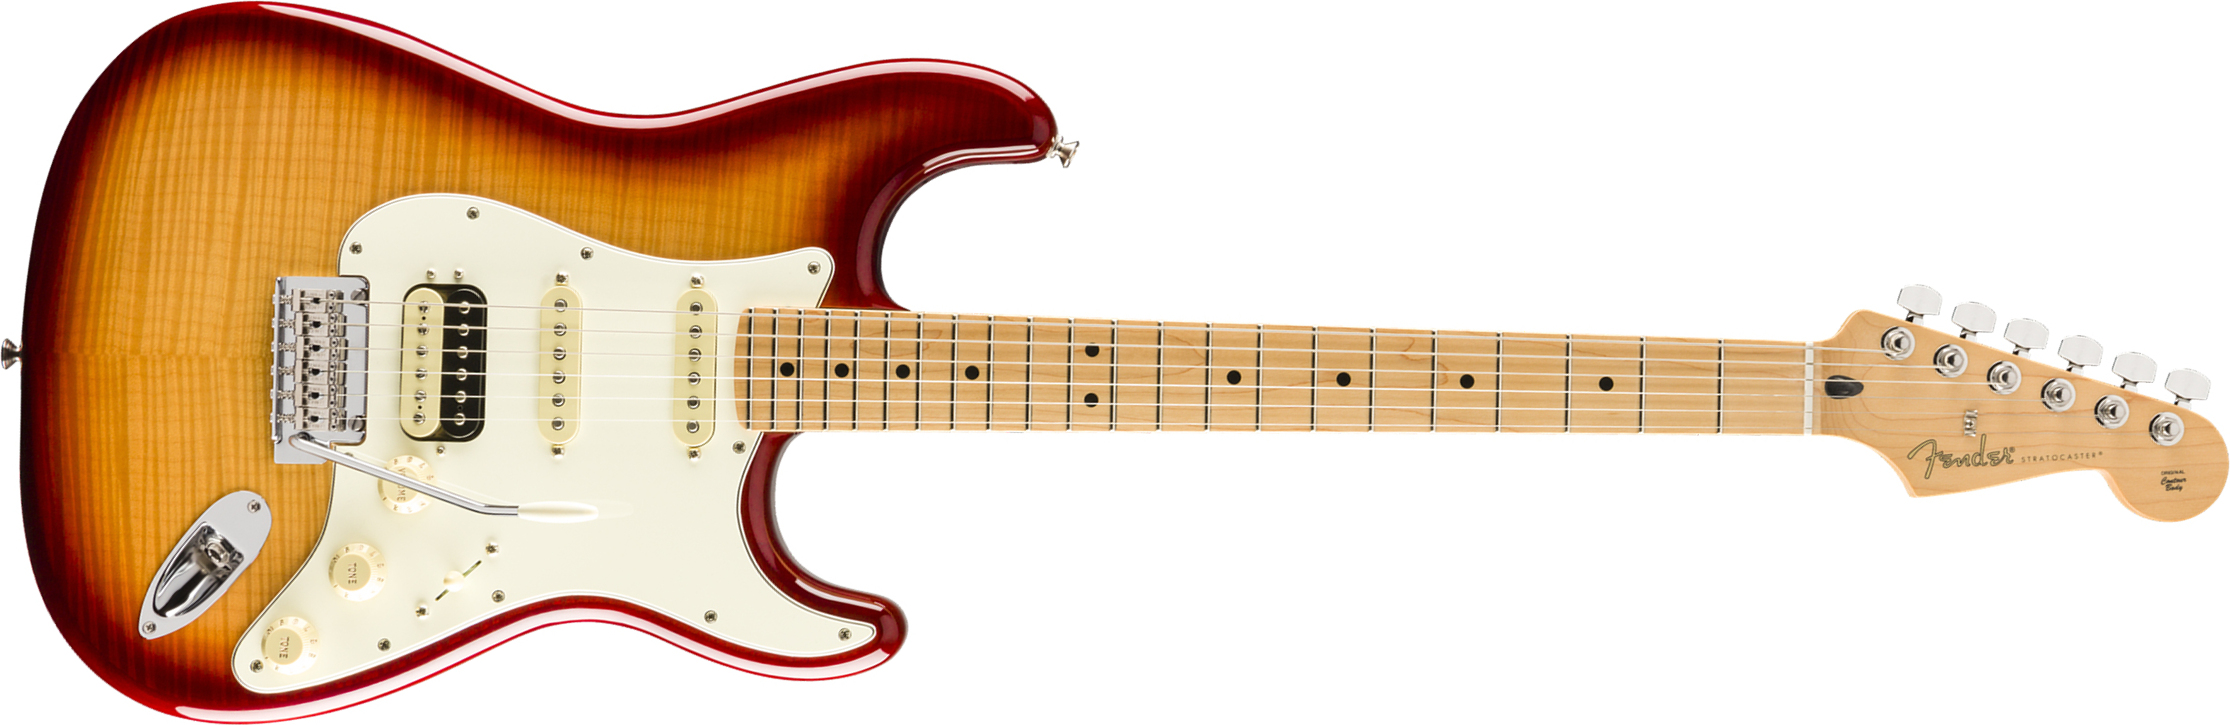 Fender Strat Player Hss Plus Top Fsr Ltd 2019 Mex Mn - Sienna Sunburst - Str shape electric guitar - Main picture